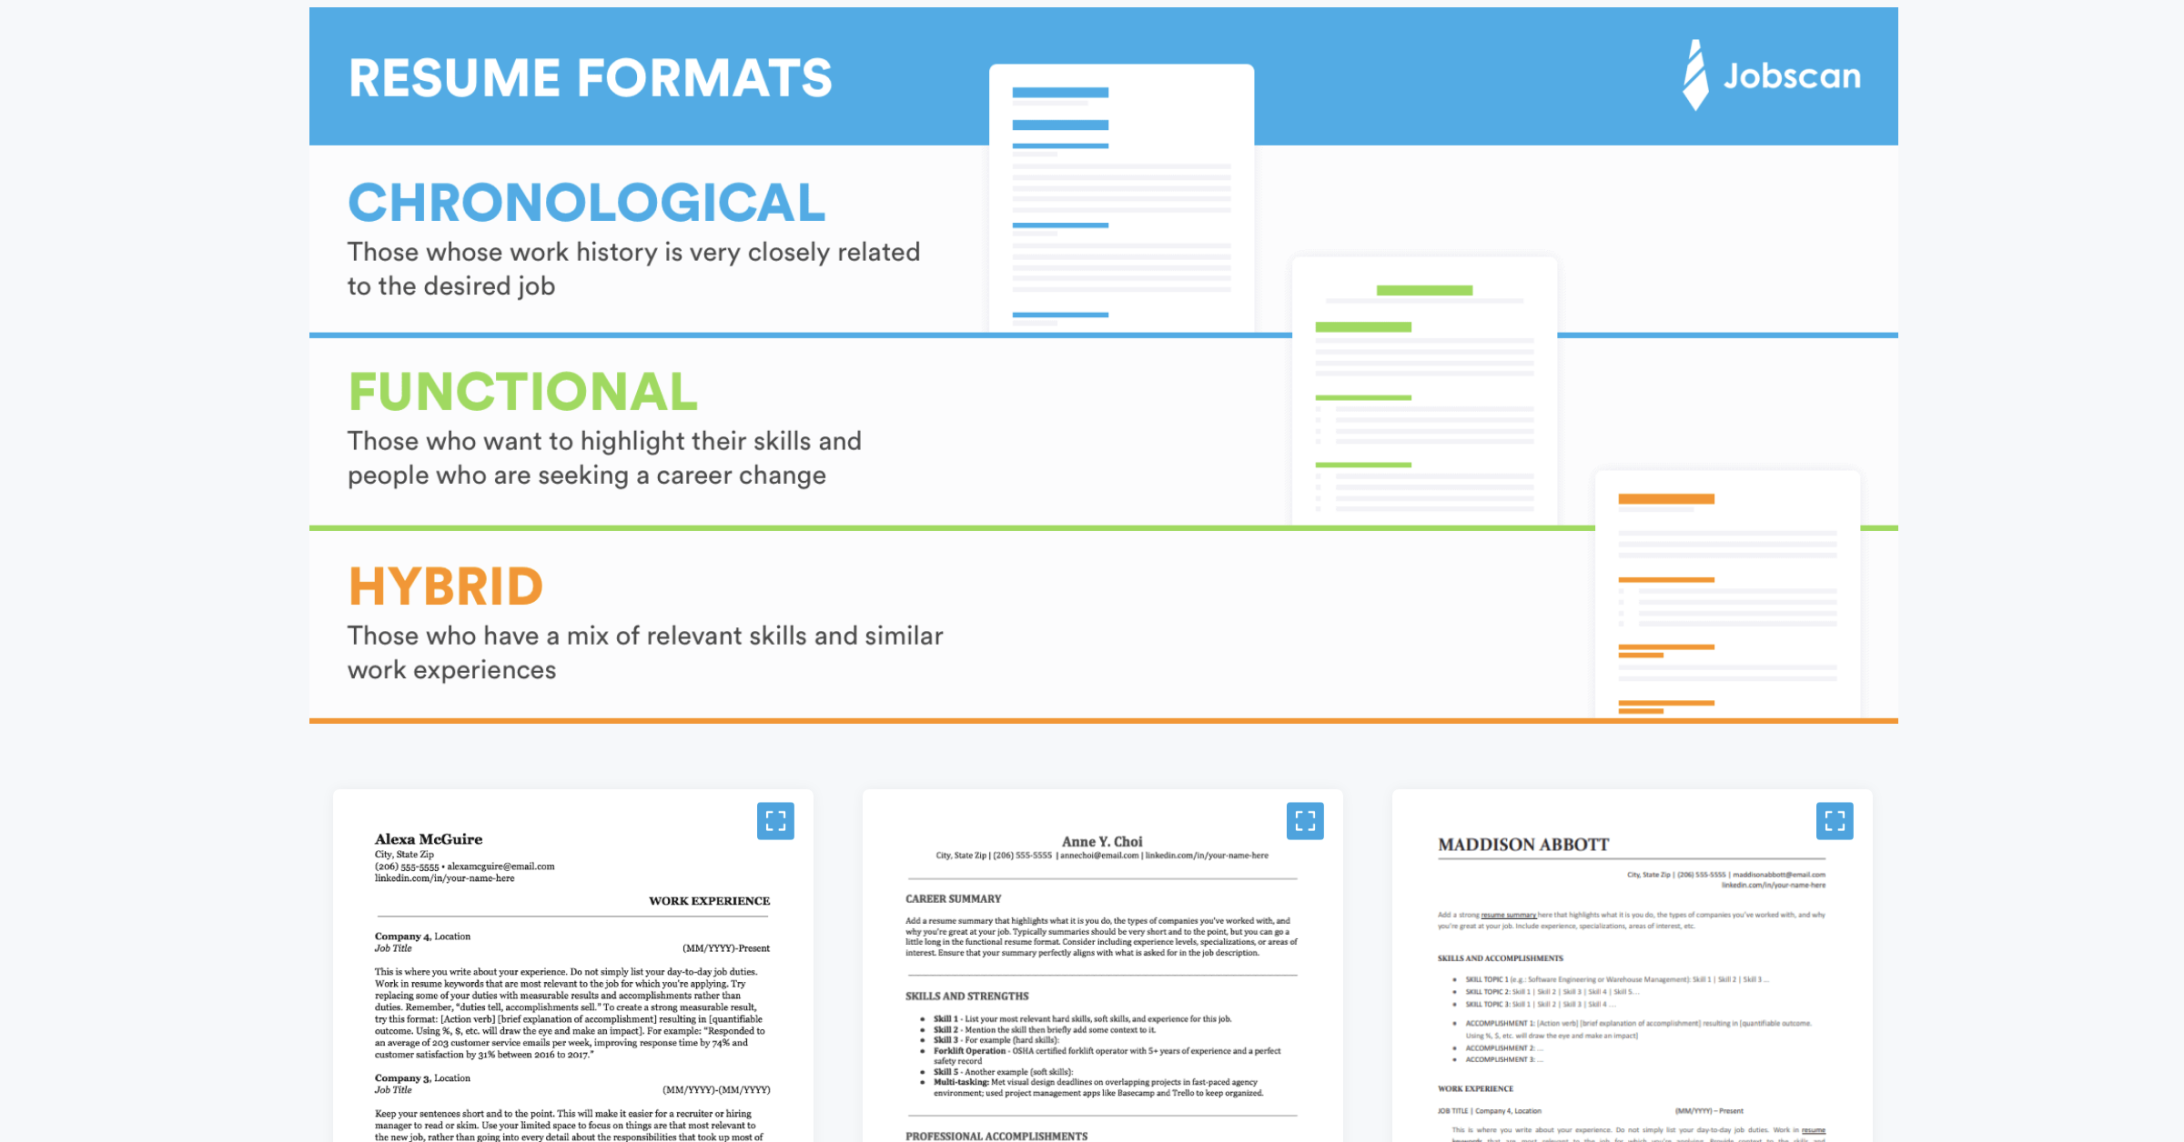 resume formats that help get you job interviews 0